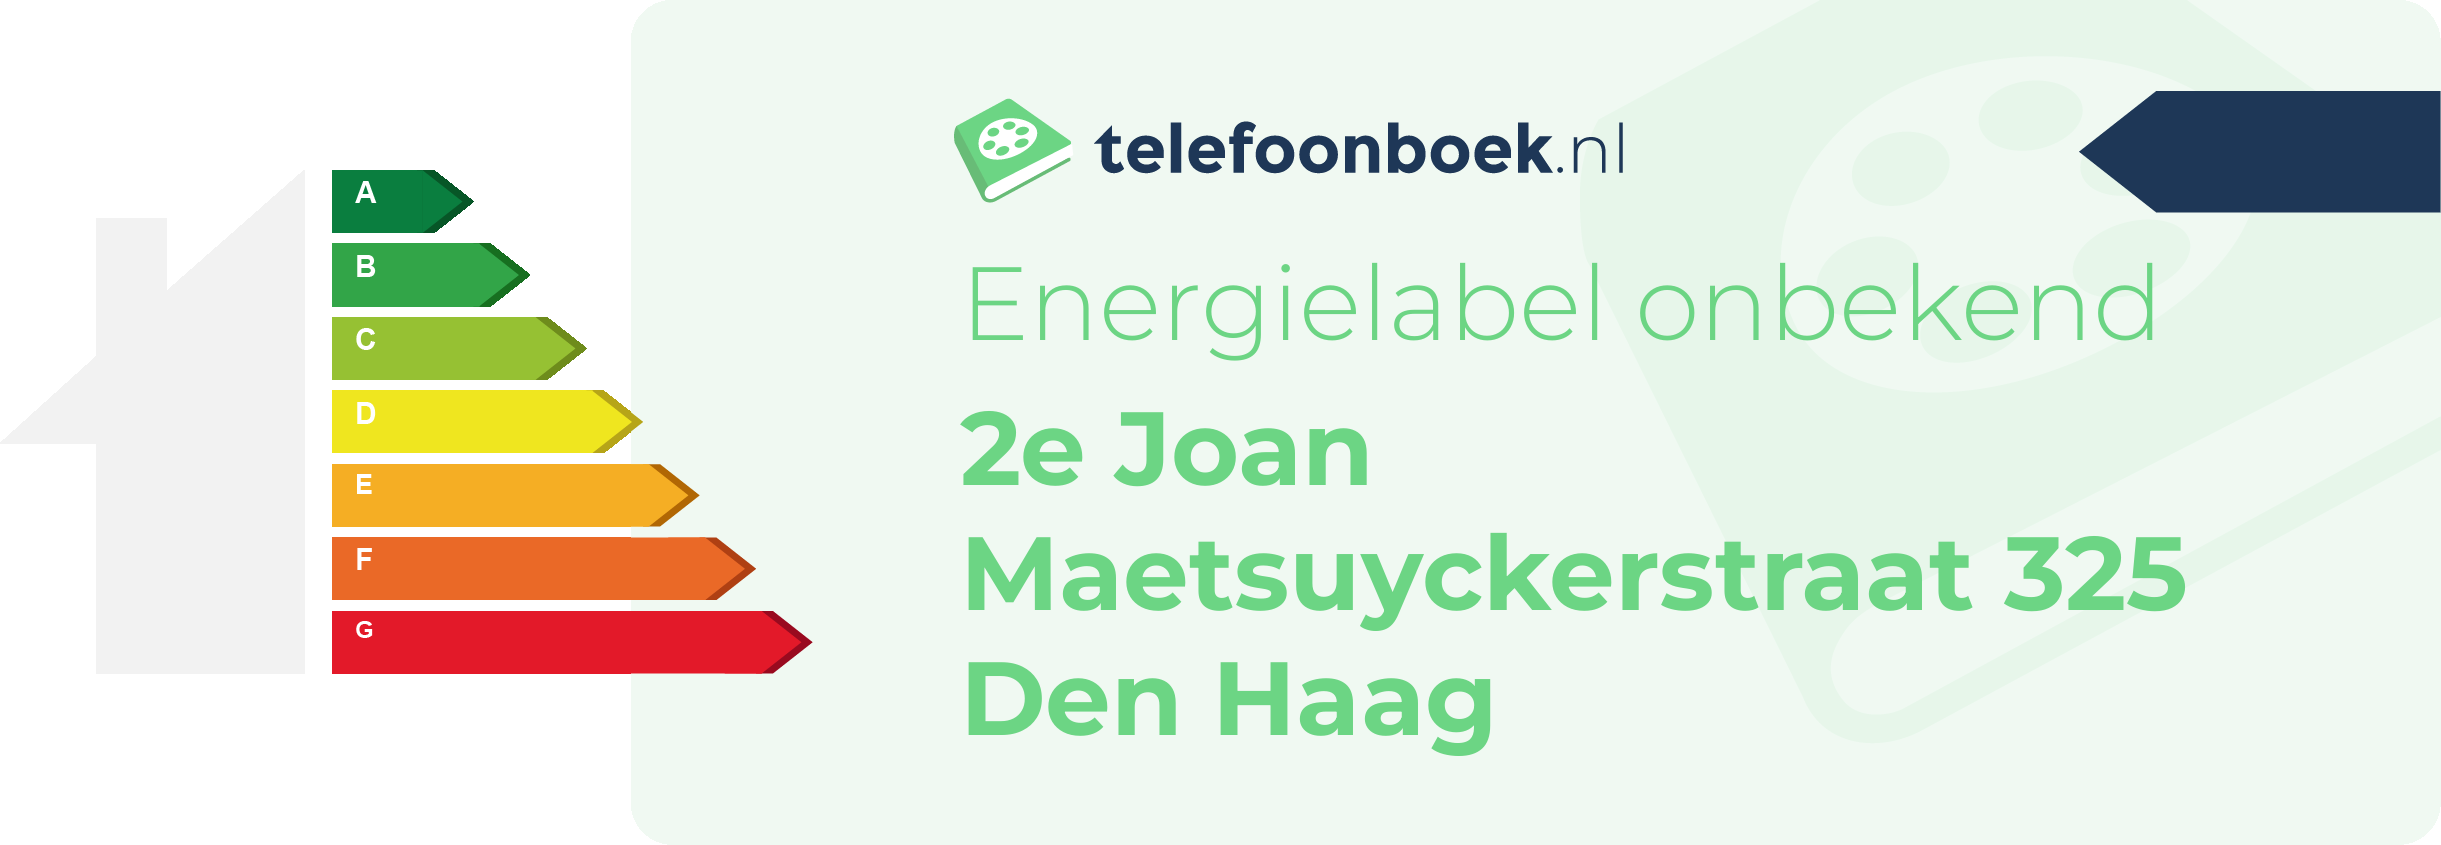 Energielabel 2e Joan Maetsuyckerstraat 325 Den Haag